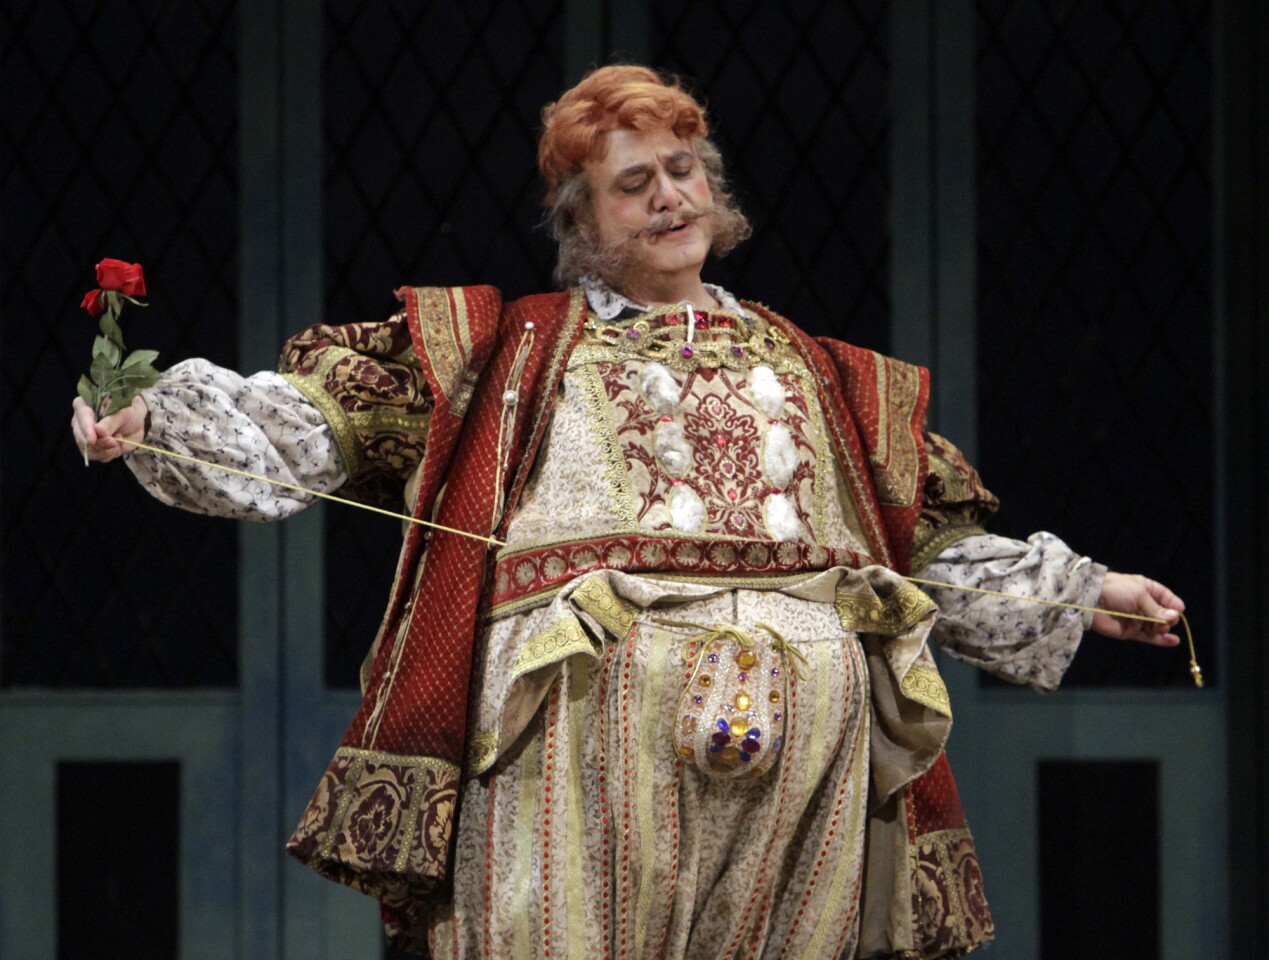 Roberto Frontali as Sir John Falstaff in Verdi's "Falstaff" at the Dorothy Chandler Pavilion in Los Angeles.